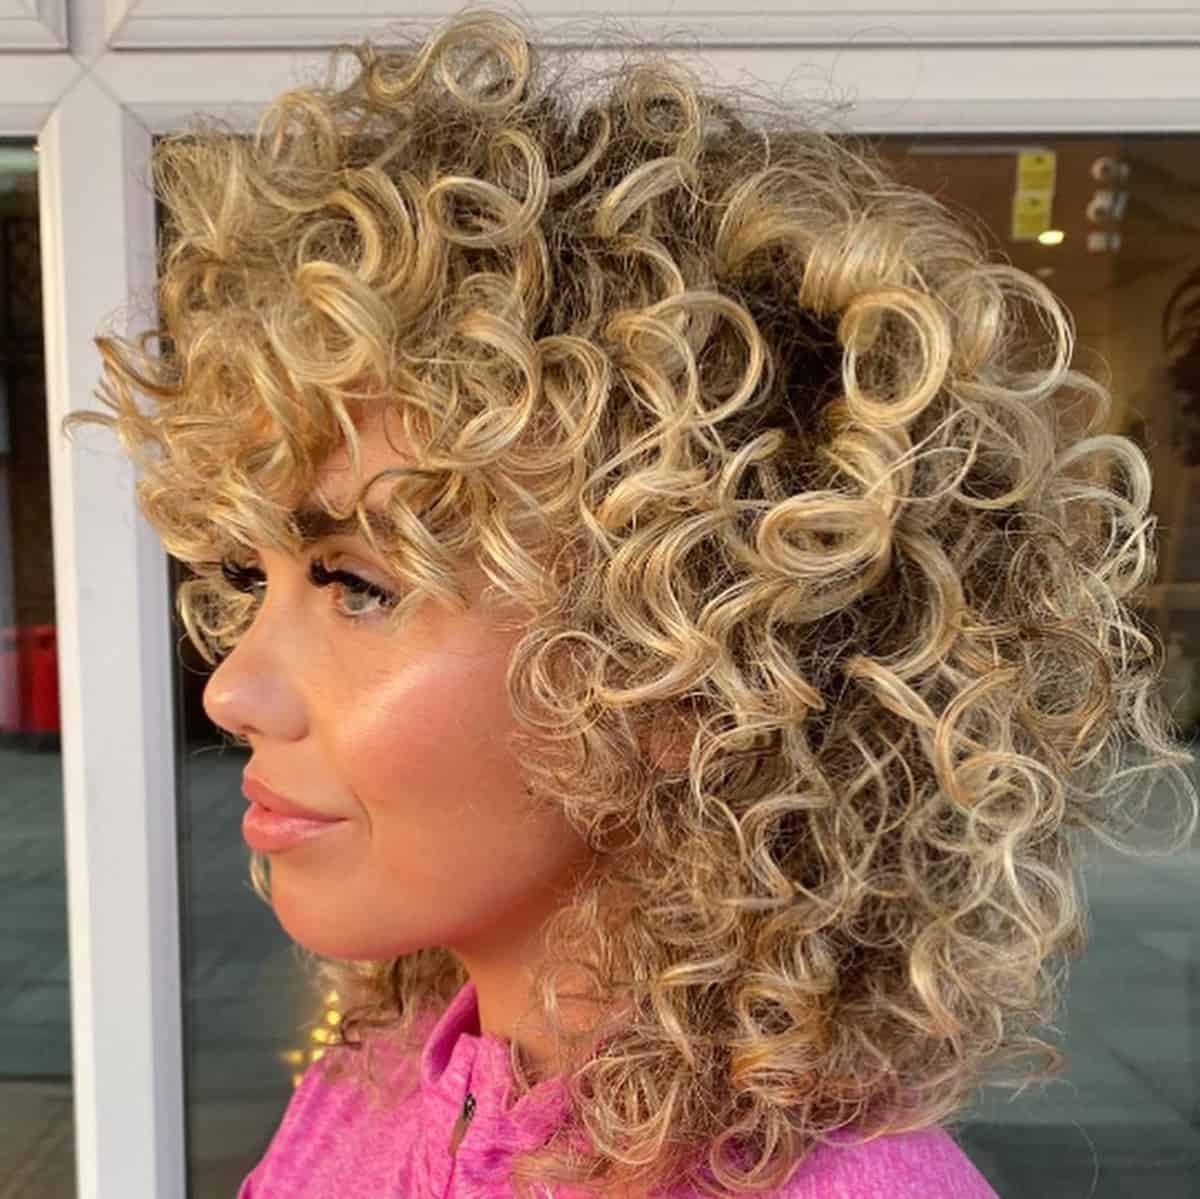 Medium-length curly hair with light bangs